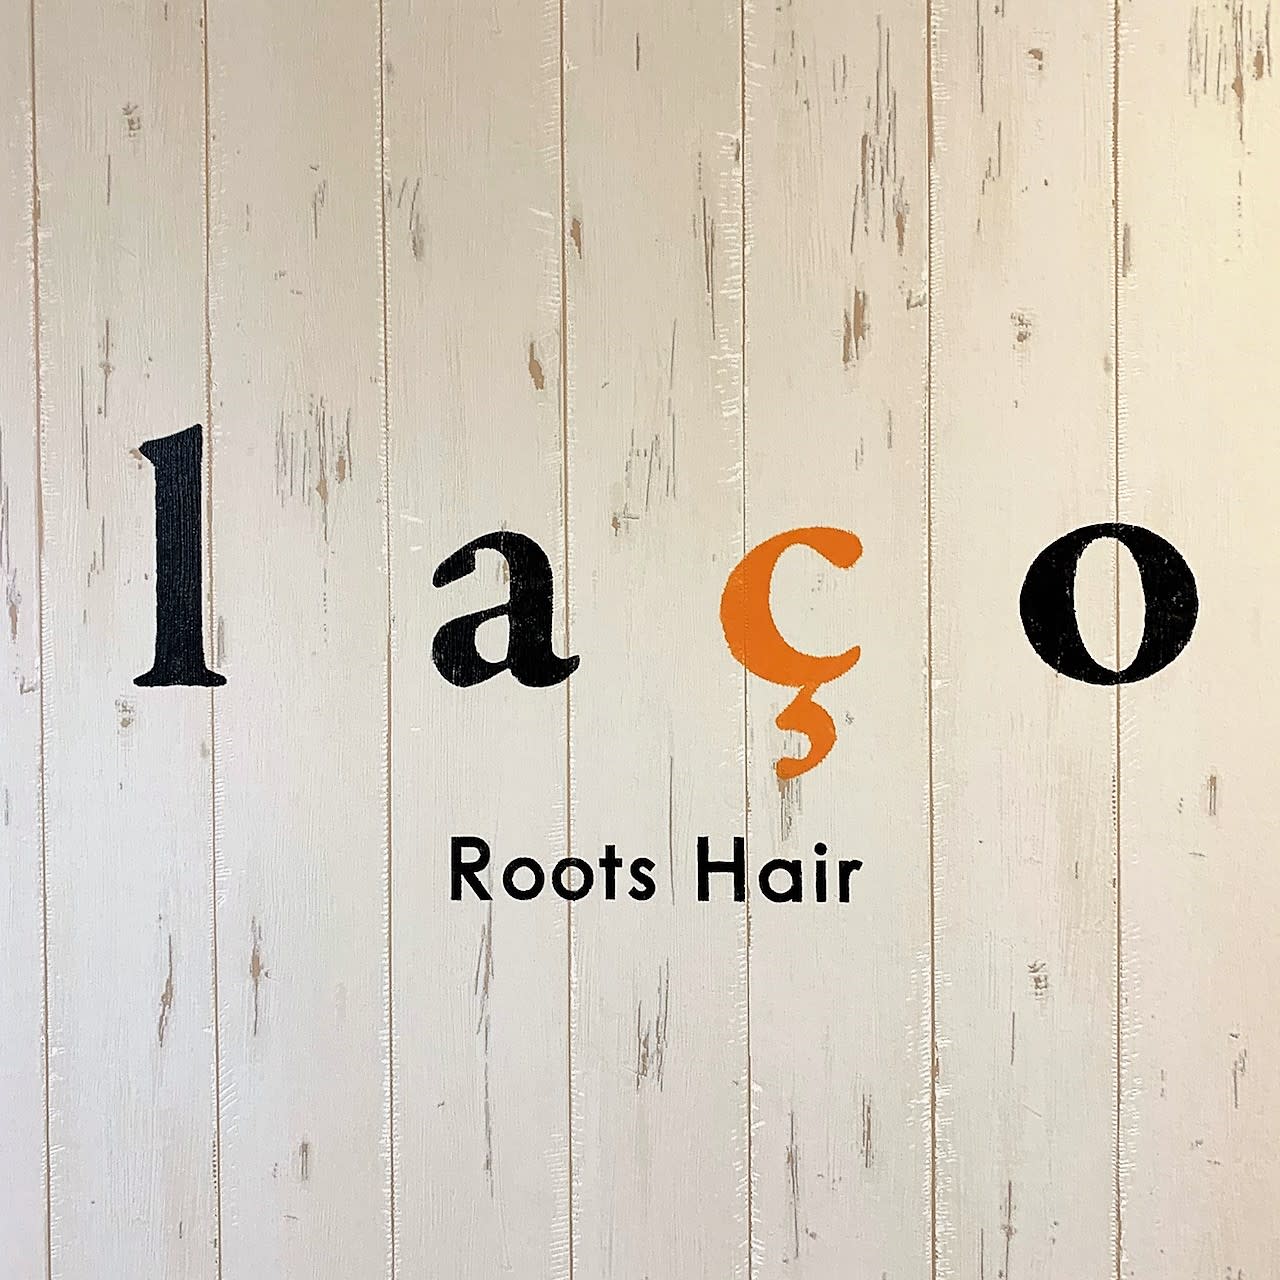 laco Roots Hair【ラッソルーツヘアー】のスタイル紹介。【laco Roots Hair】Hair Catalog